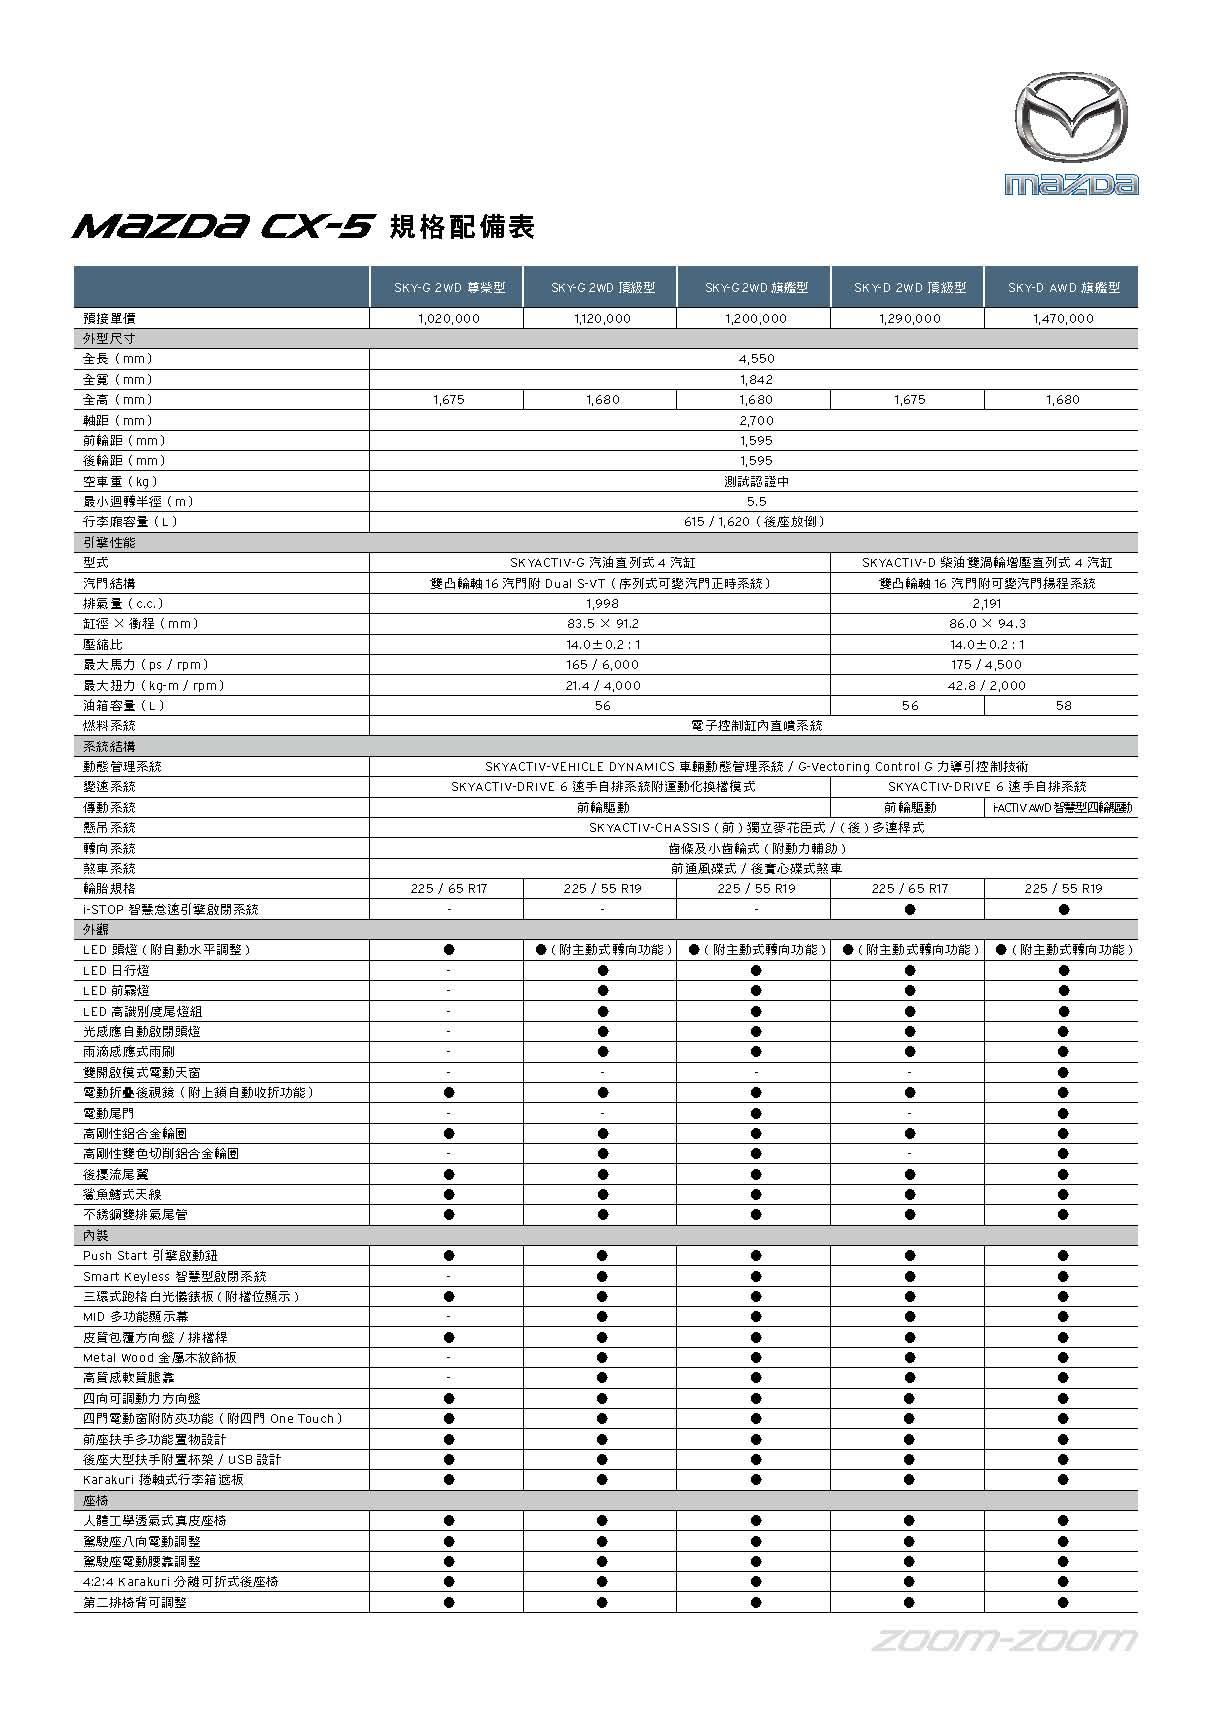 【MAZDA新聞附件】 All-new MAZDA CX-5「汽油旗艦型」配備說明_頁面_1